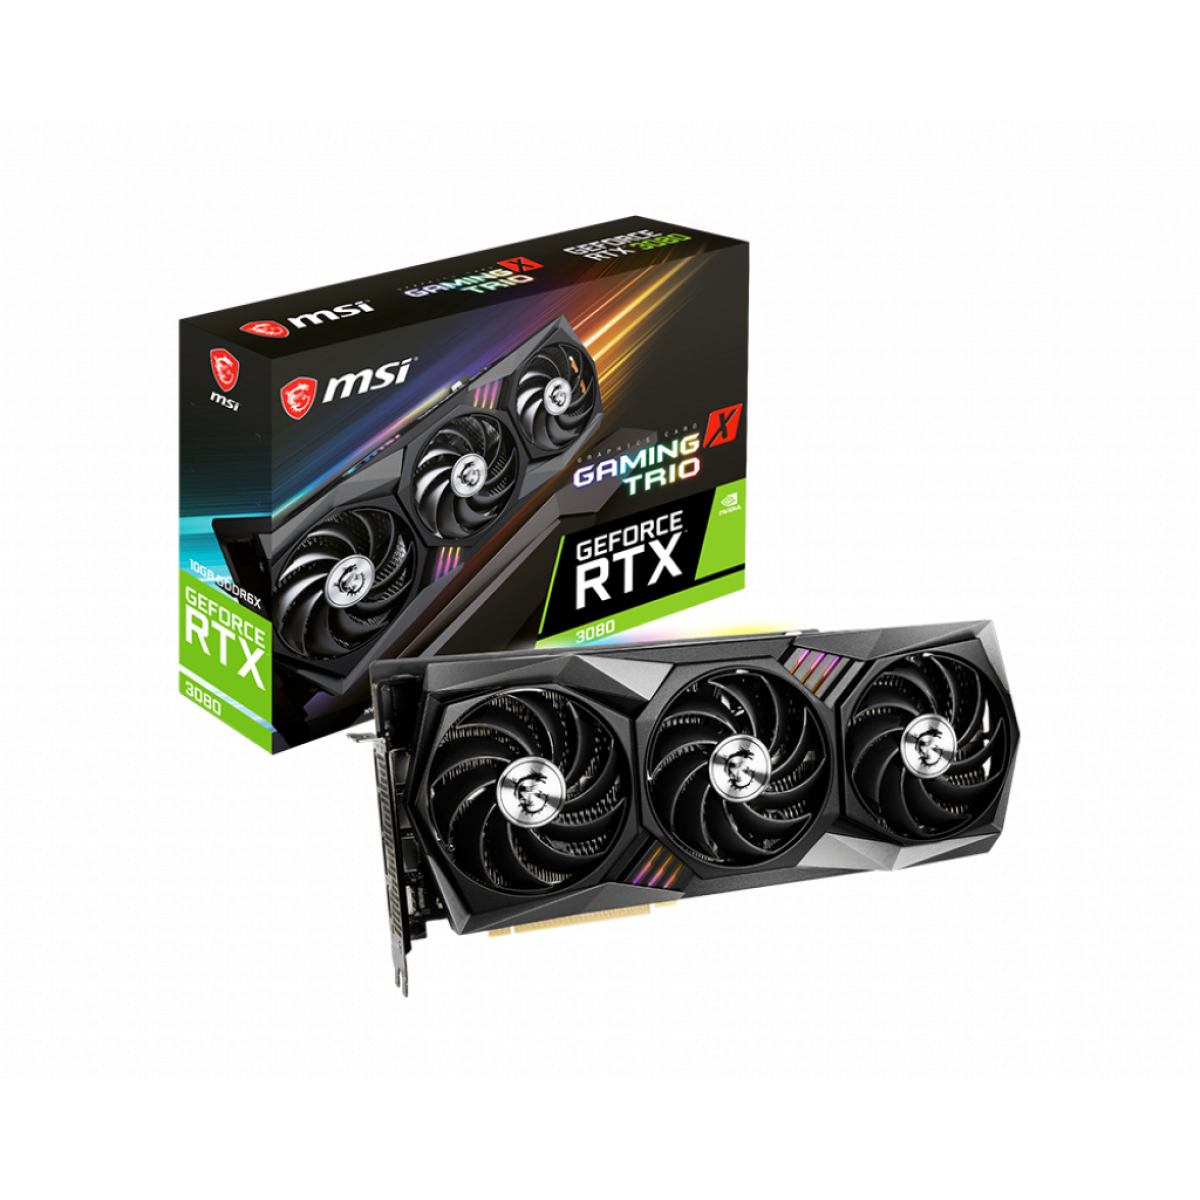 MSI GeForce RTX 3080 X TriO 10G